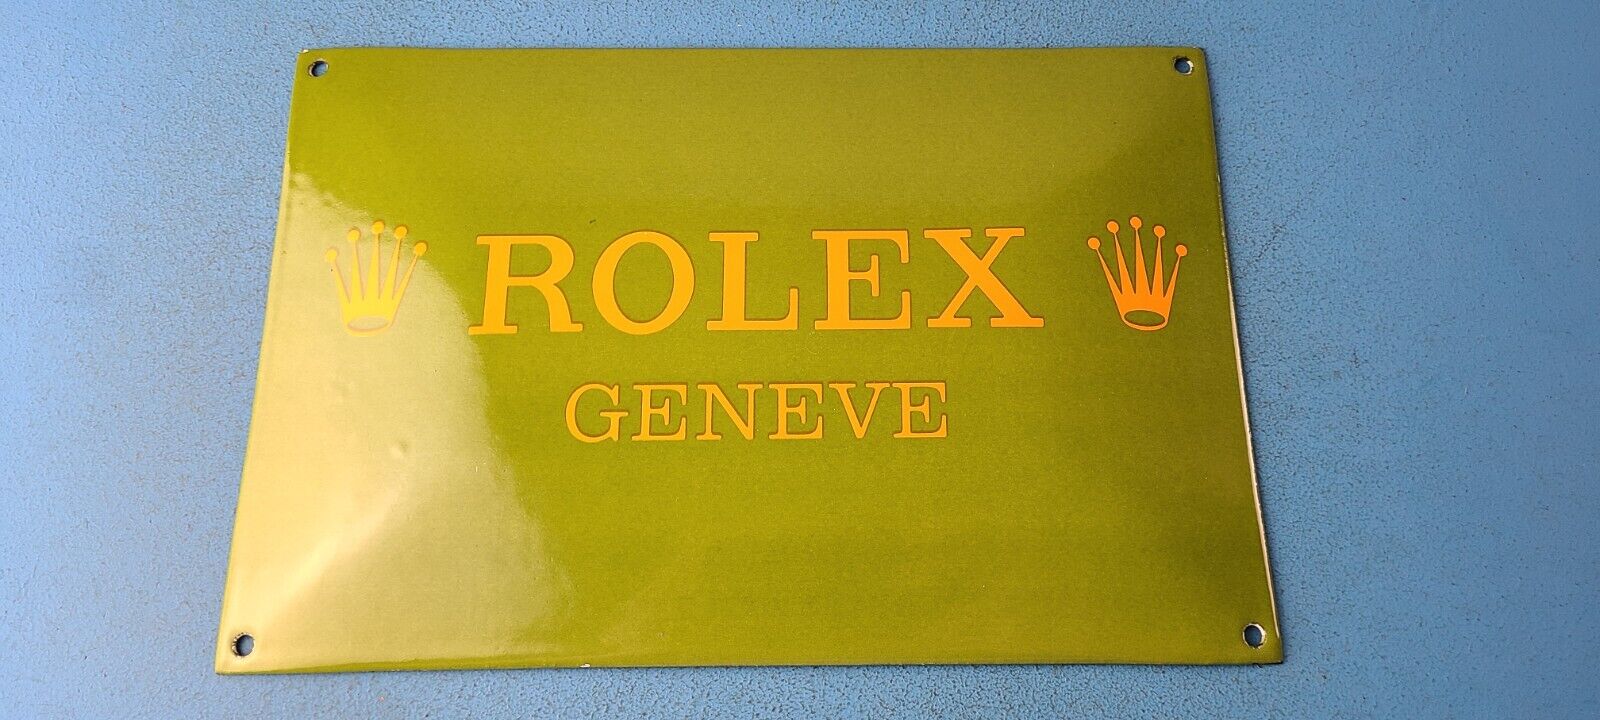 Vintage Rolex Luxury Watches Porcelain Convex - Geneve Store Gas Service Sign